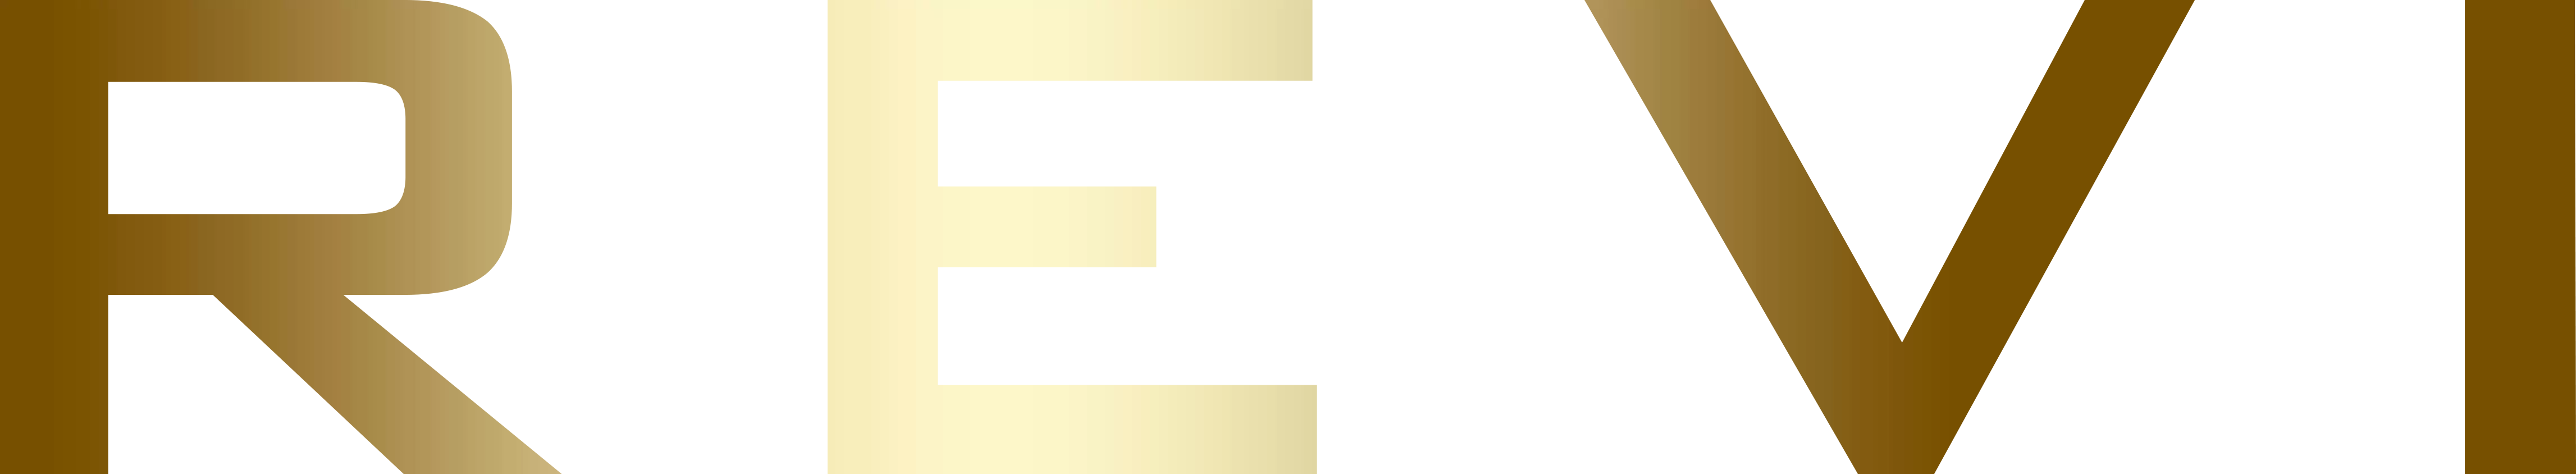 Косметика бренда REVI, логотип